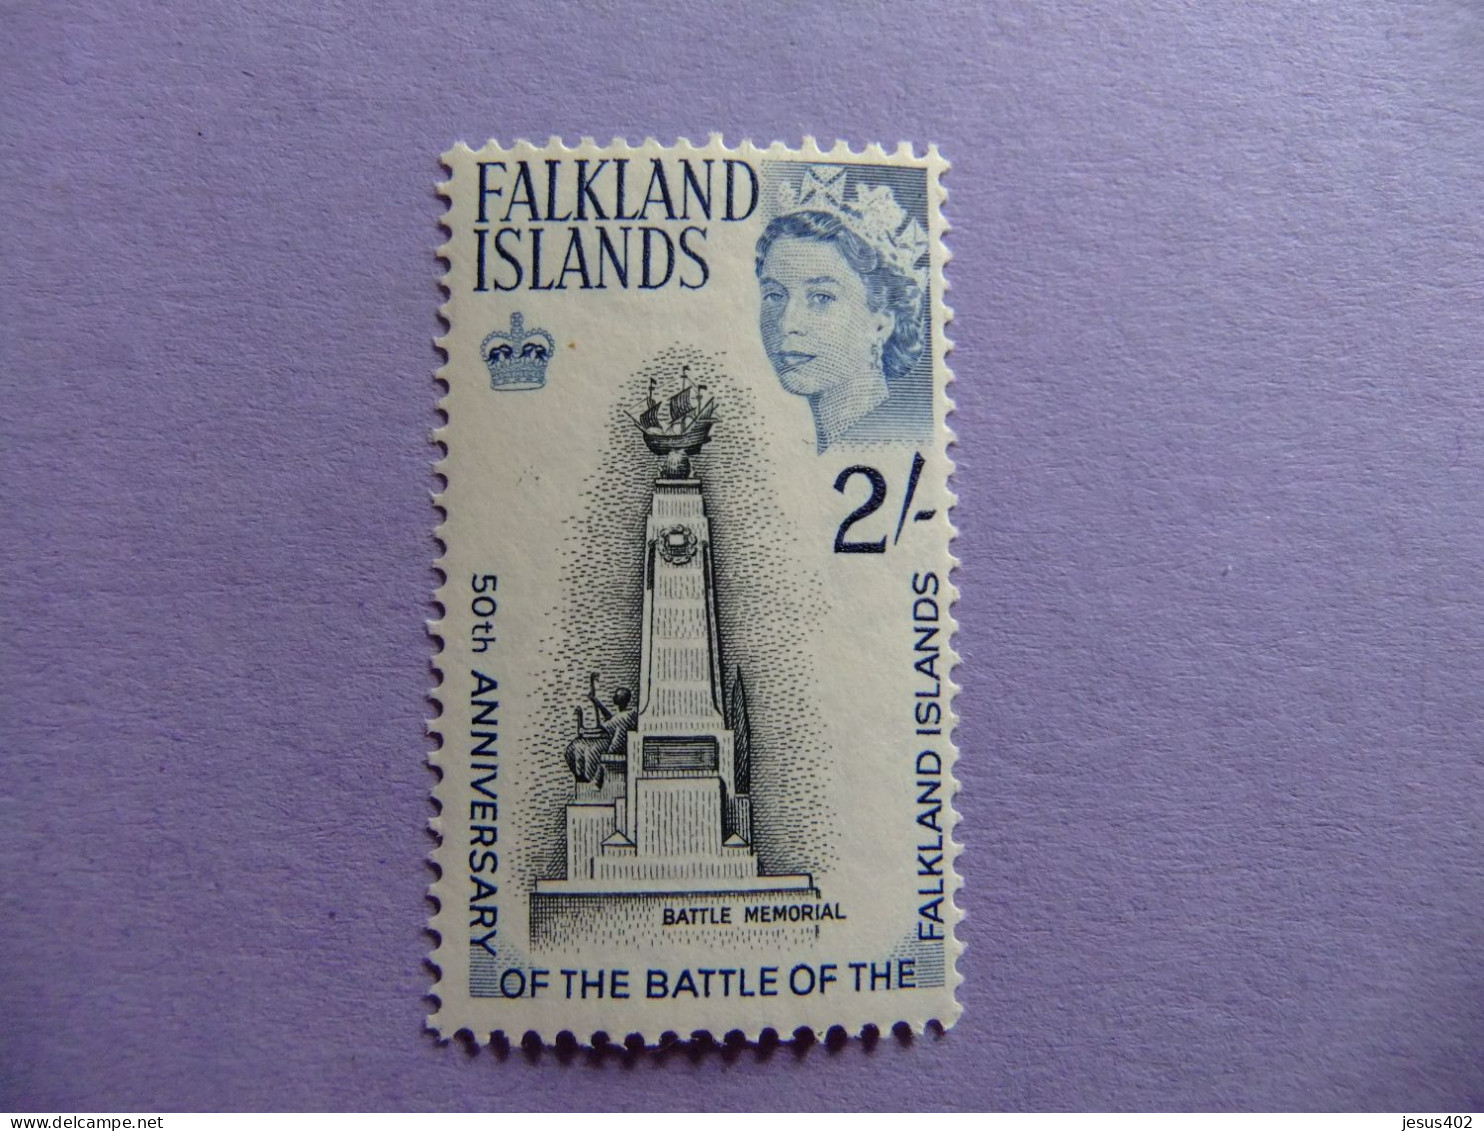 MALVINAS FALKLAND ISLANDS 1964 MEMORIAL DE LA BATALLA E FALKLAND YVERT 147 MNH - Maldiven (...-1965)